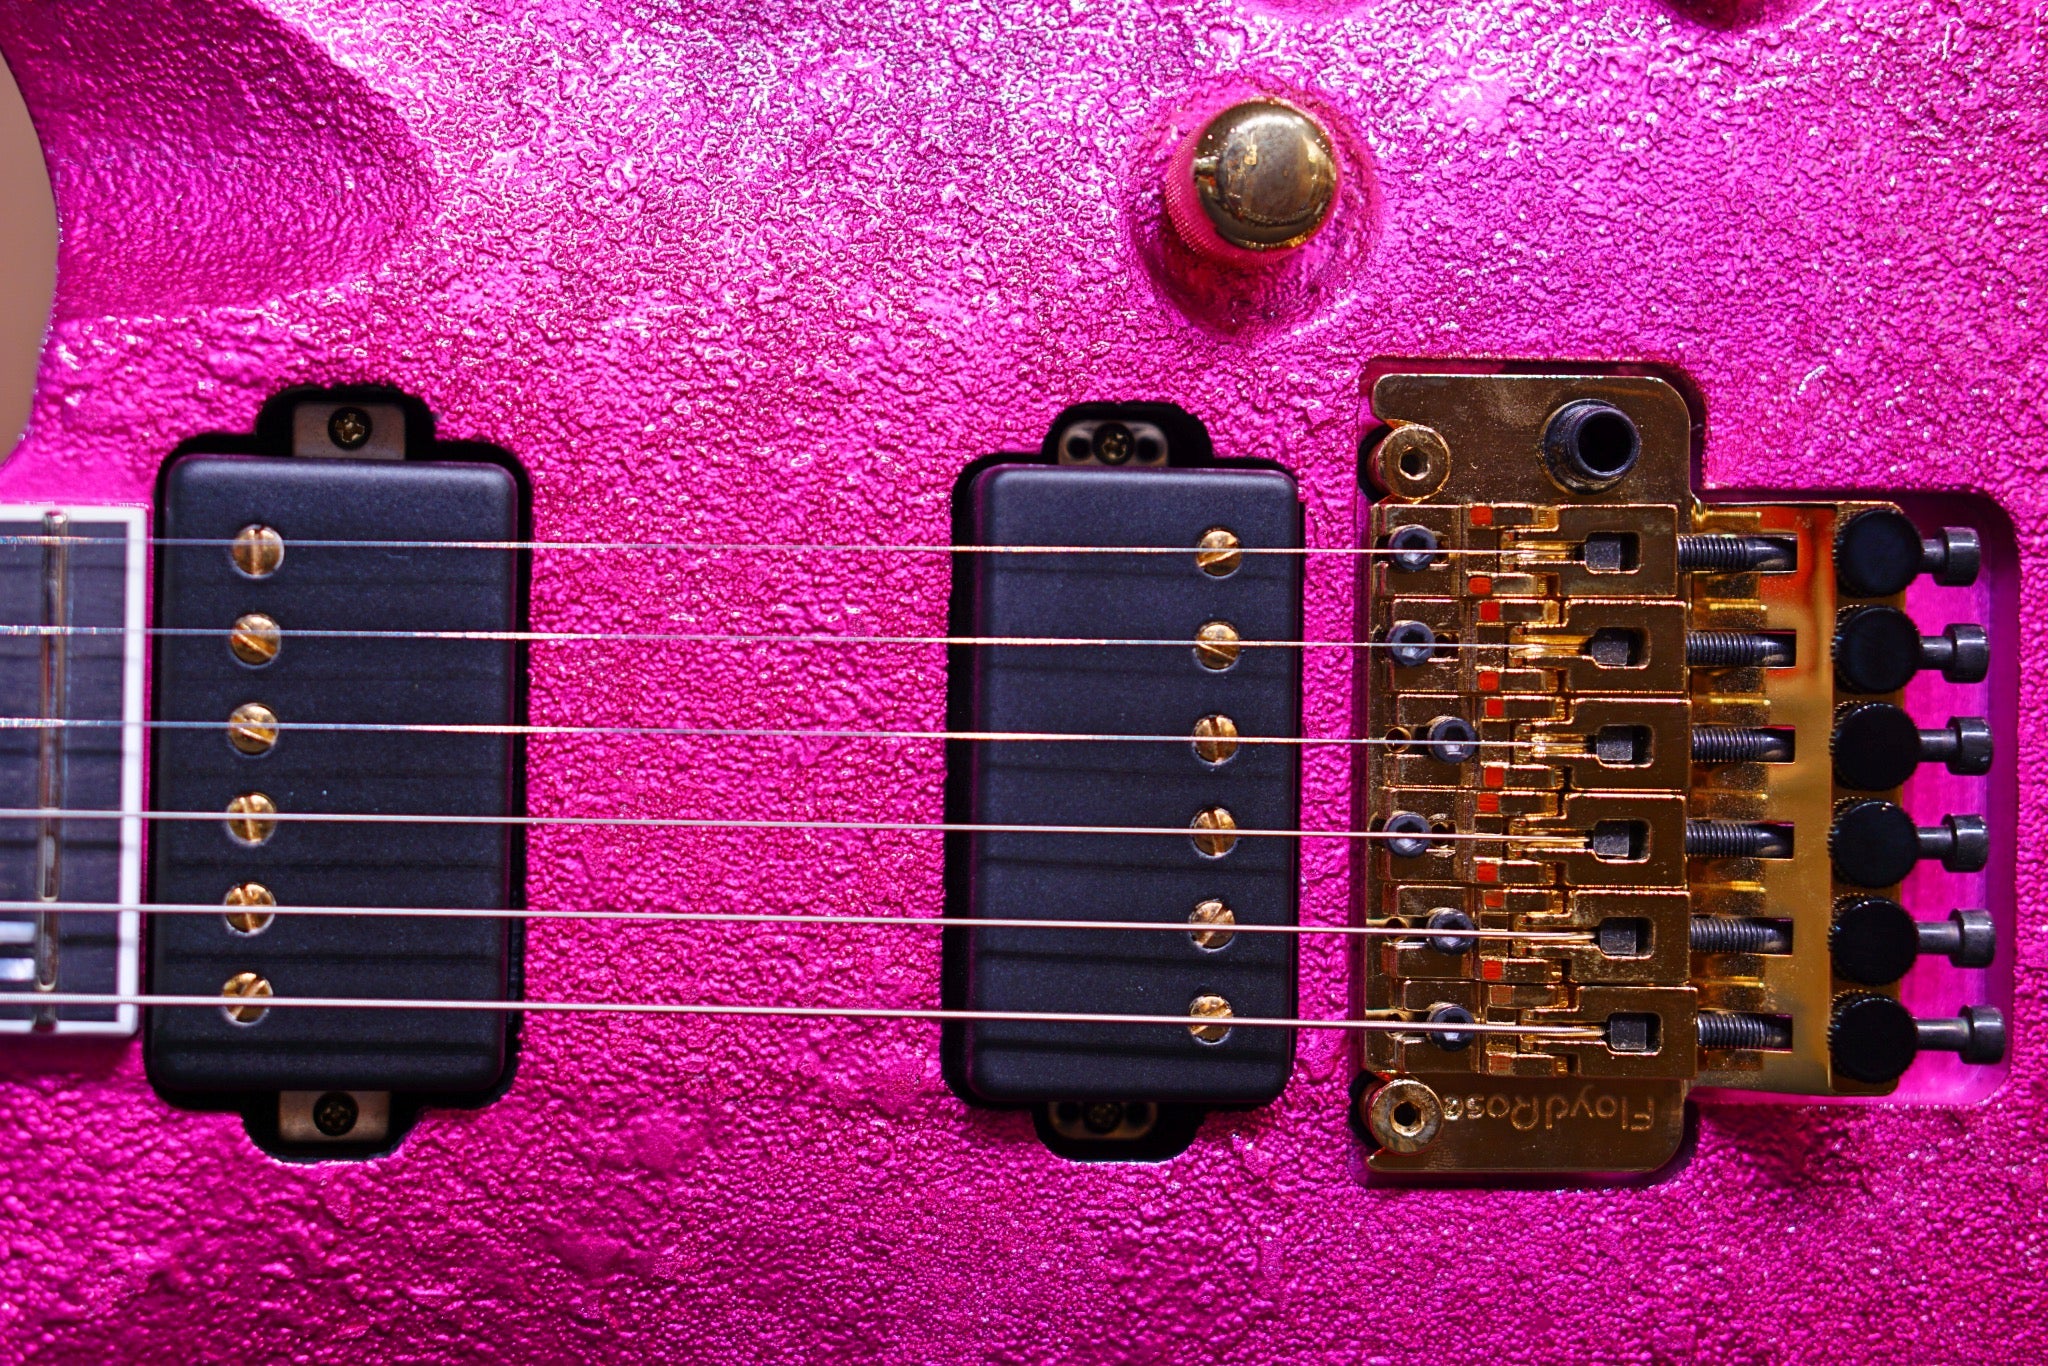 ESP Original Horizon III Castmetal pink E7690212 - HIENDGUITAR   esp GUITAR